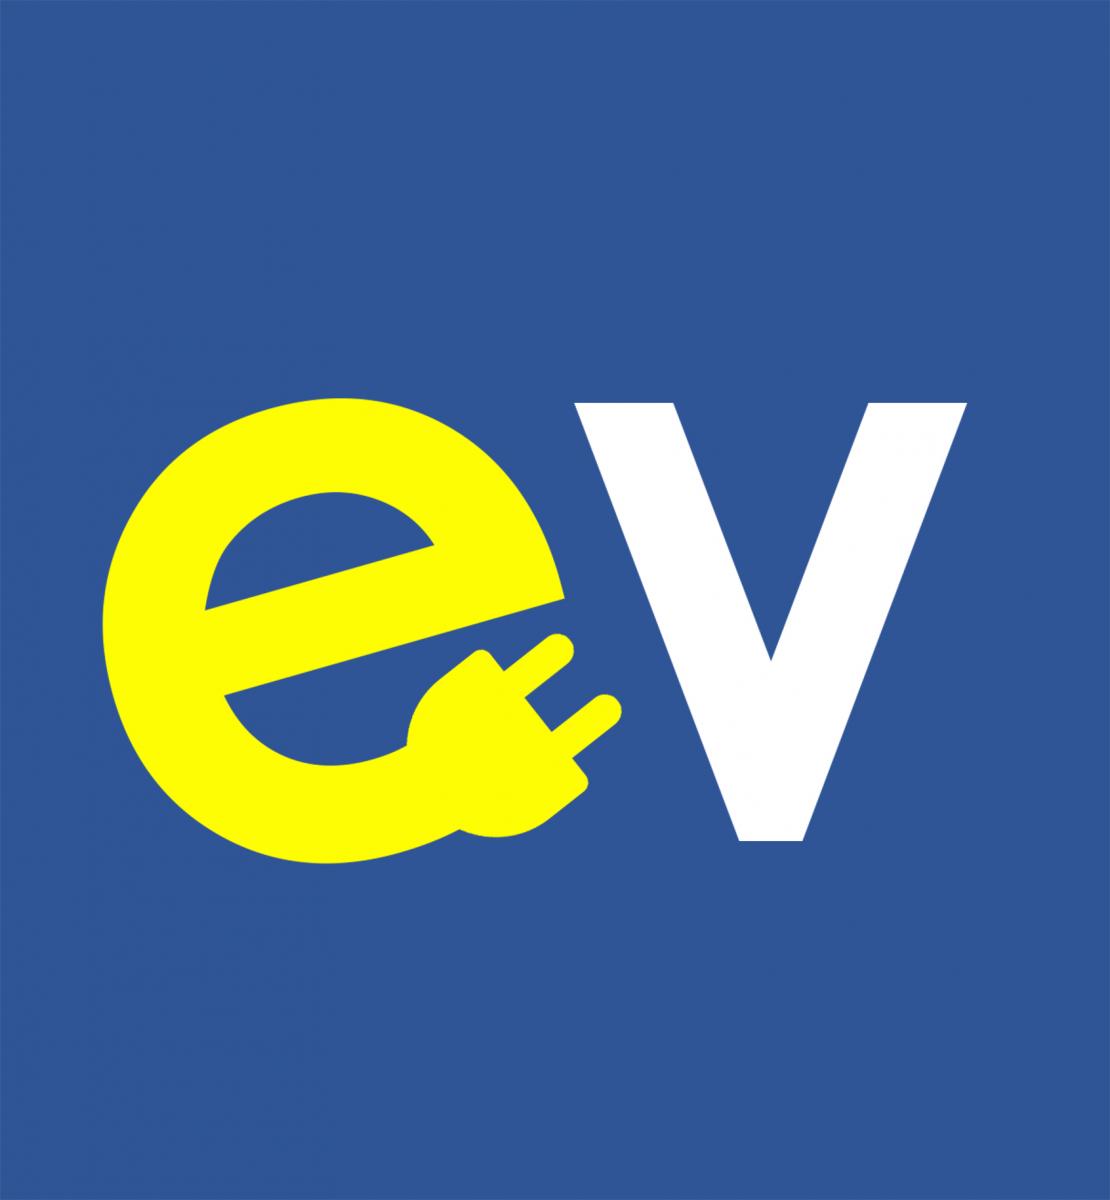 EVCS logo